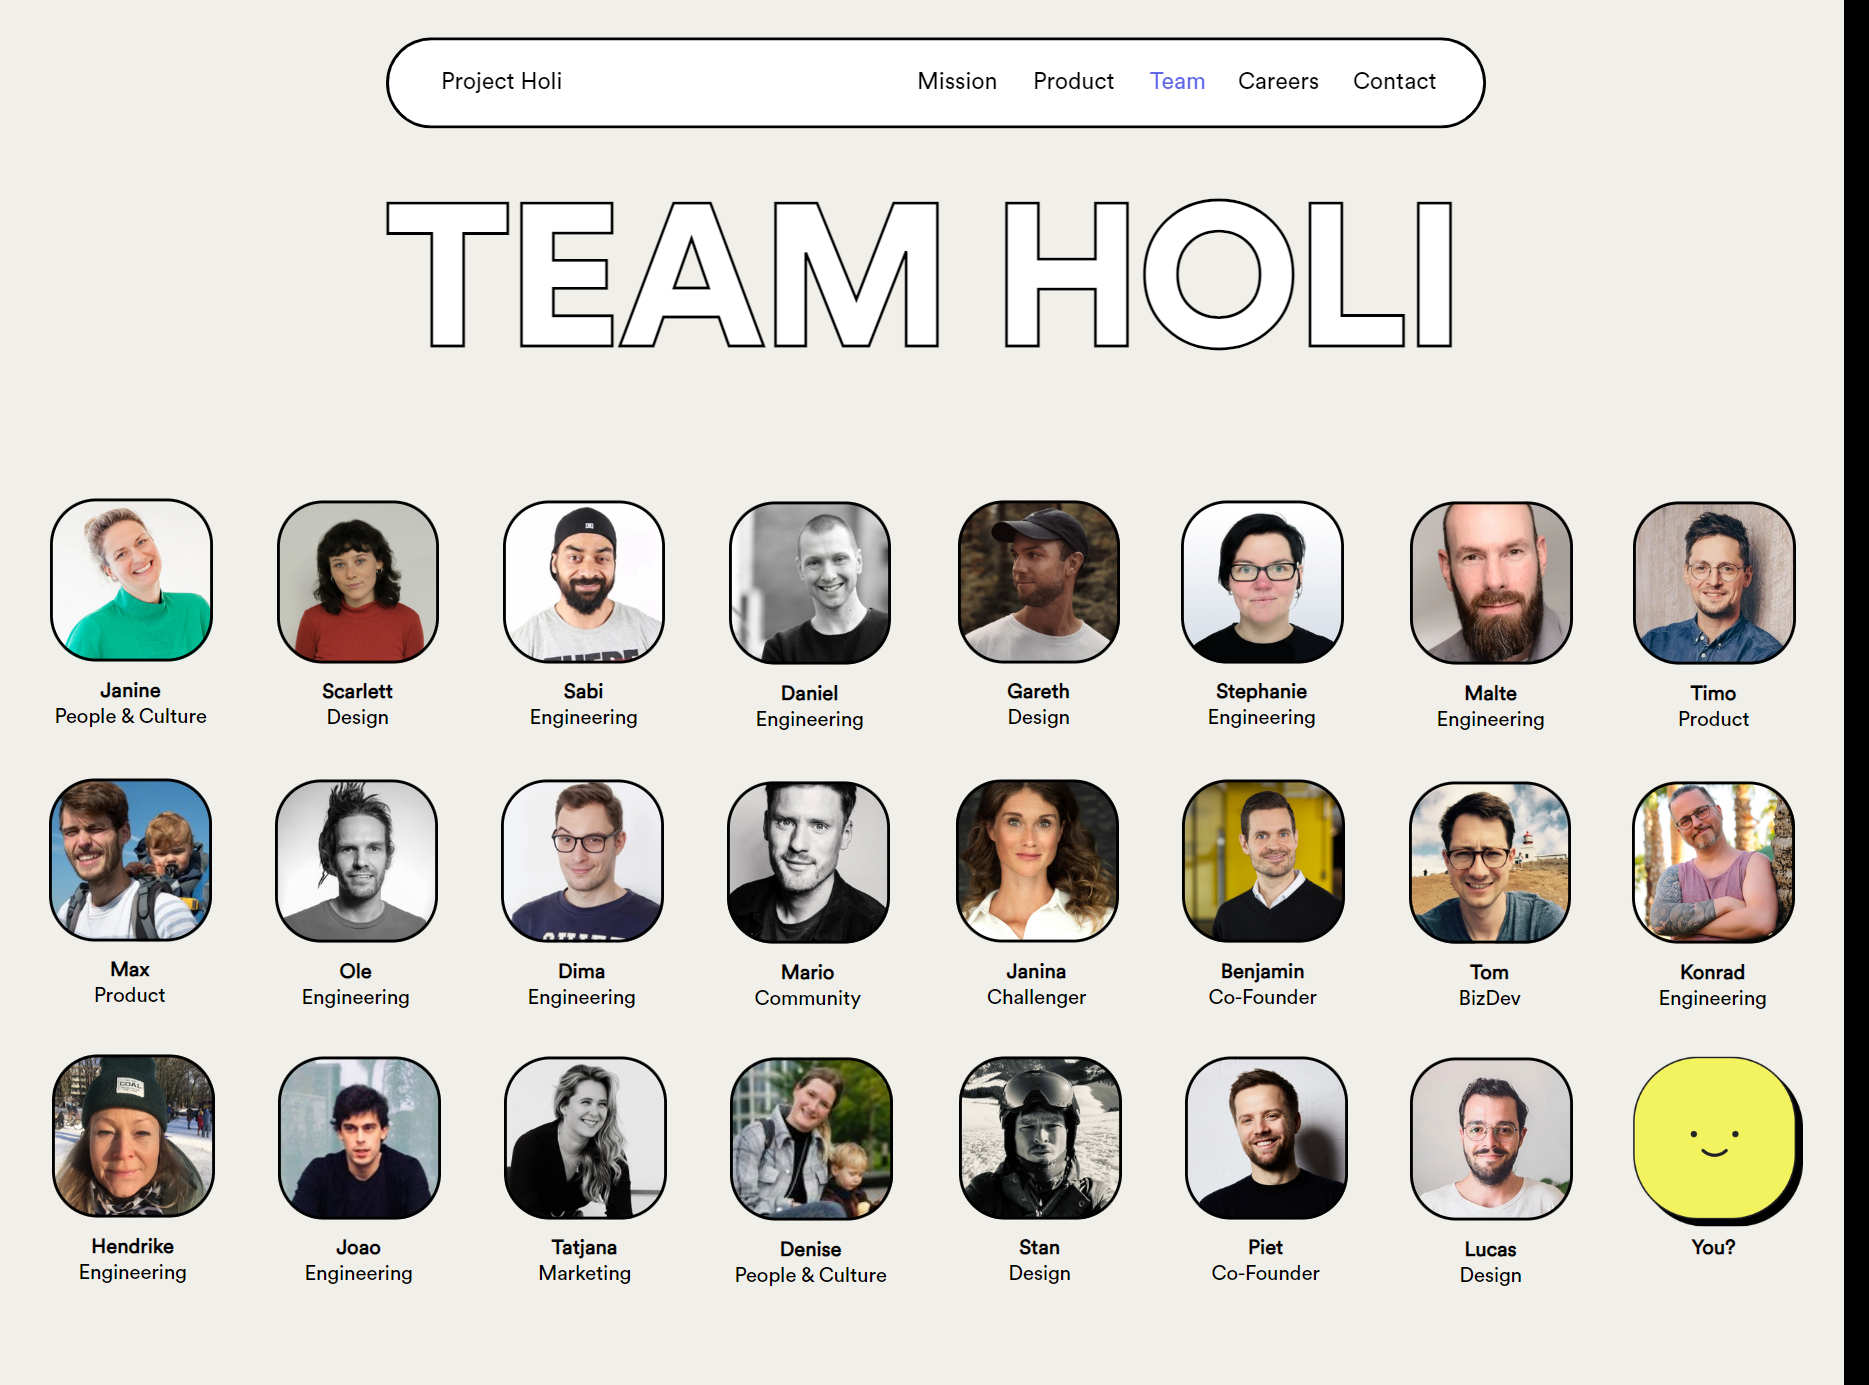 Team - Project Holi: Positive Change